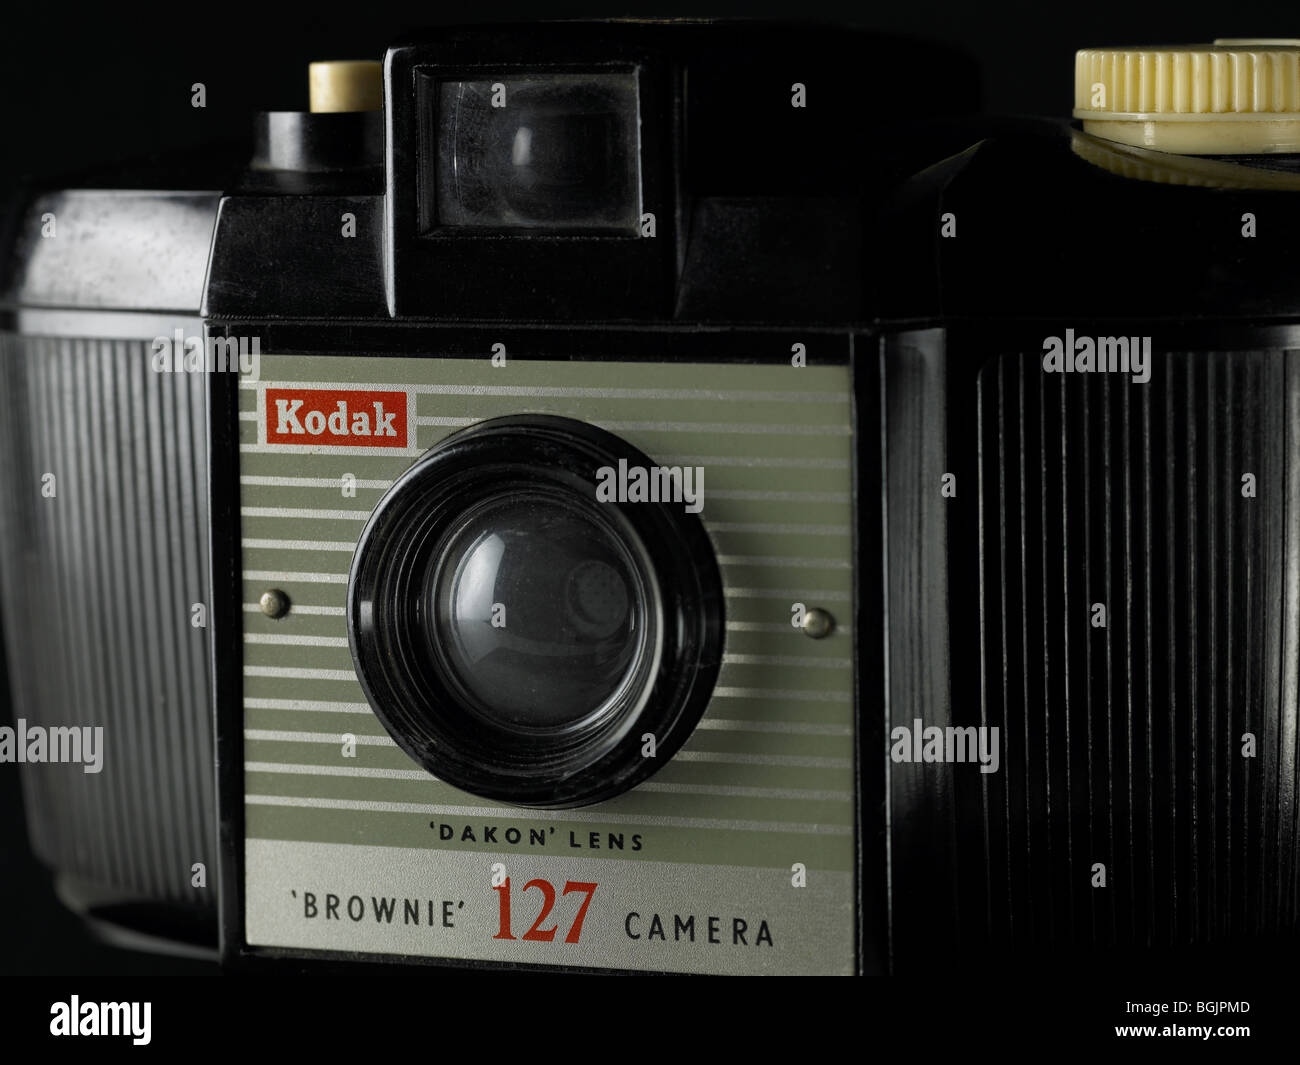 Kodak brownie 127 camera Stock Photo